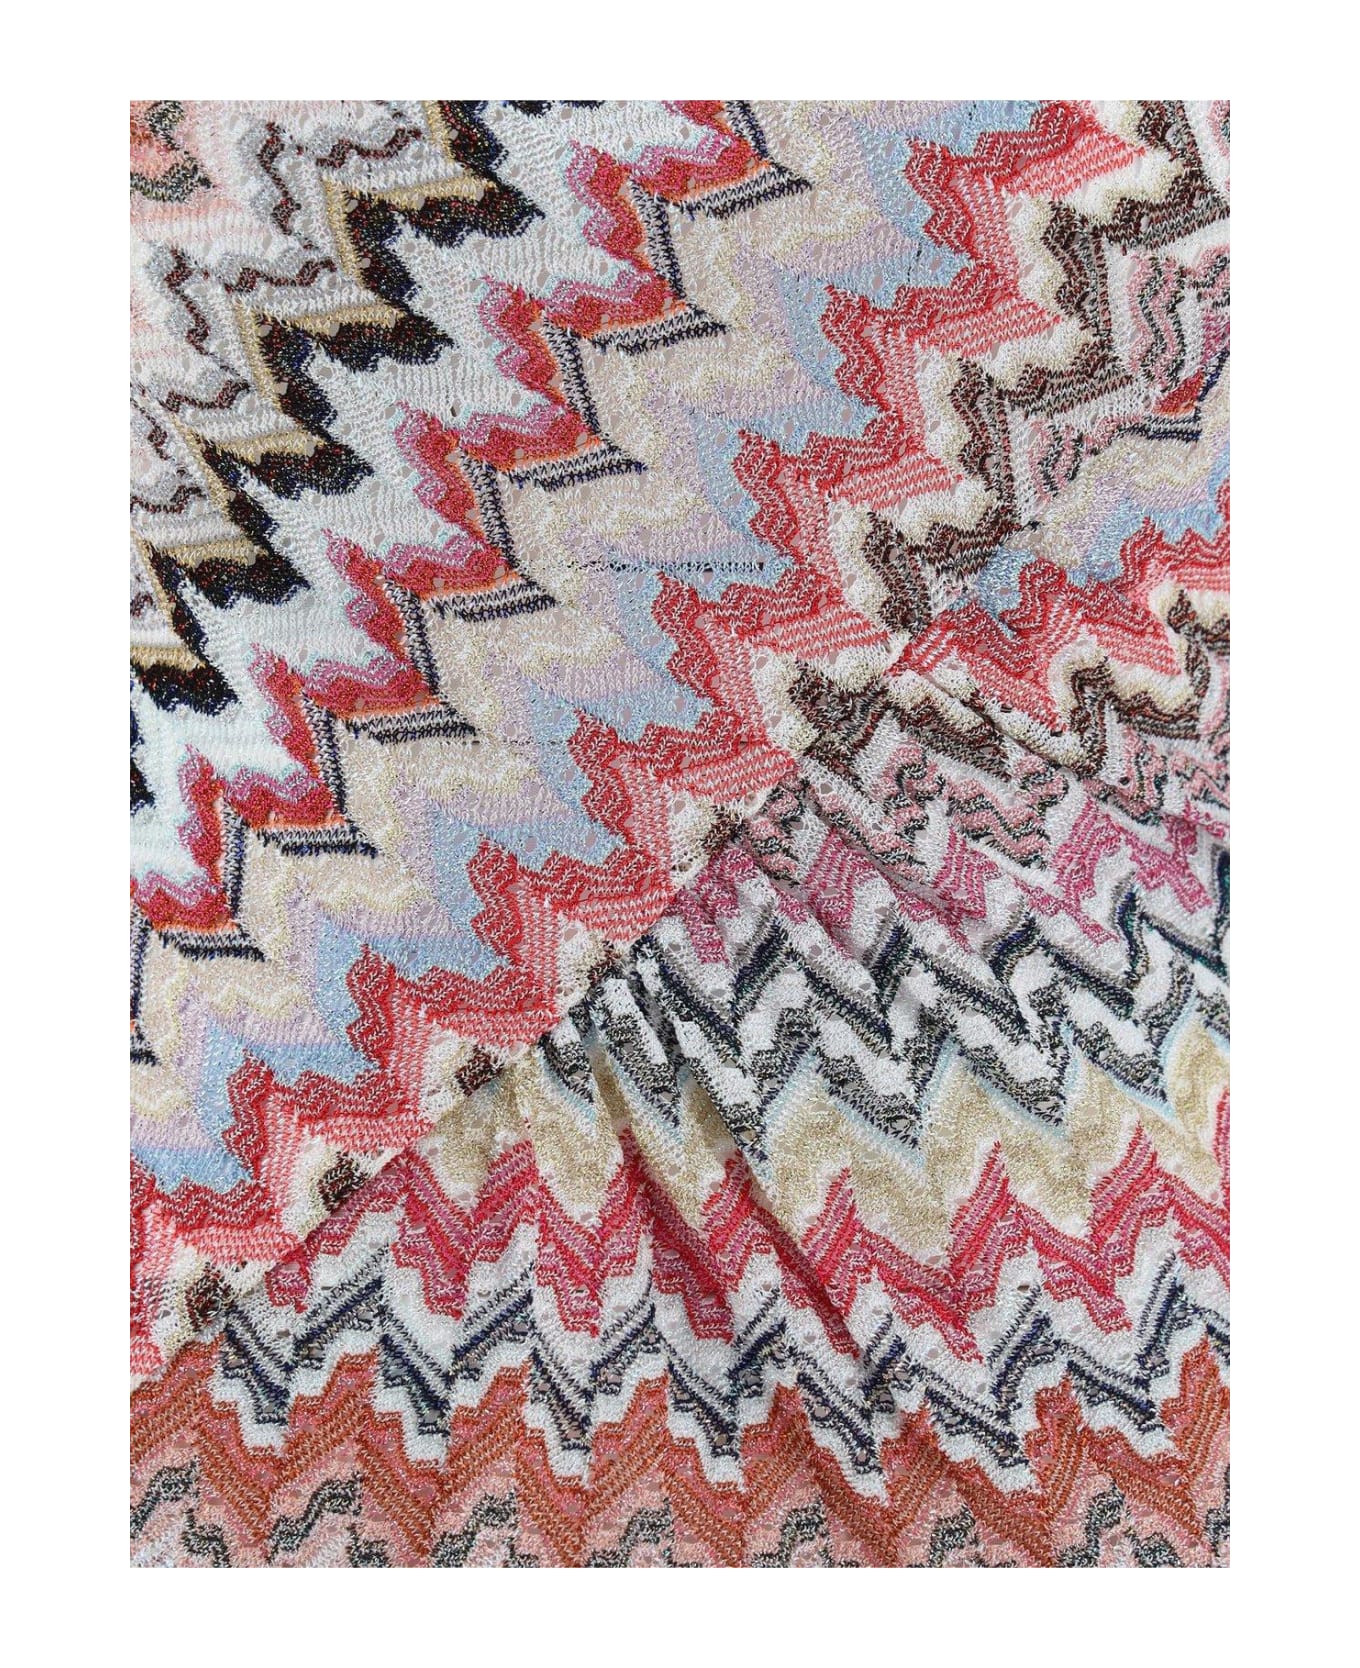 Missoni Zigzag Pattern Knitted Sleeveless Top - Fondo bianco